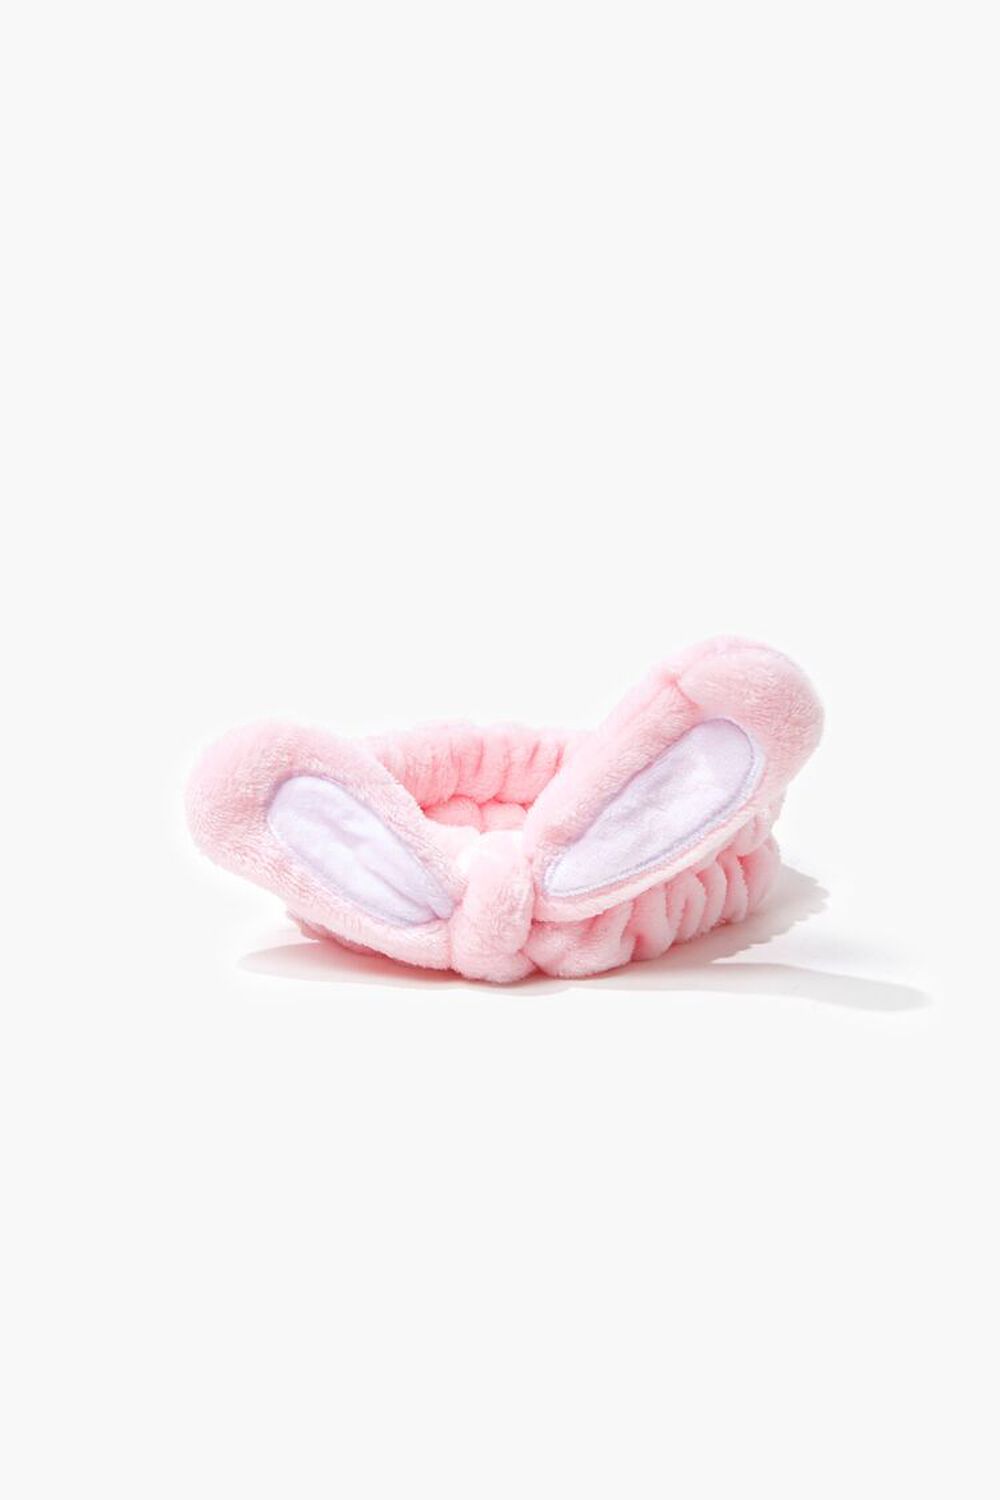 PINK/MULTI Bunny Ear Headwrap, image 1